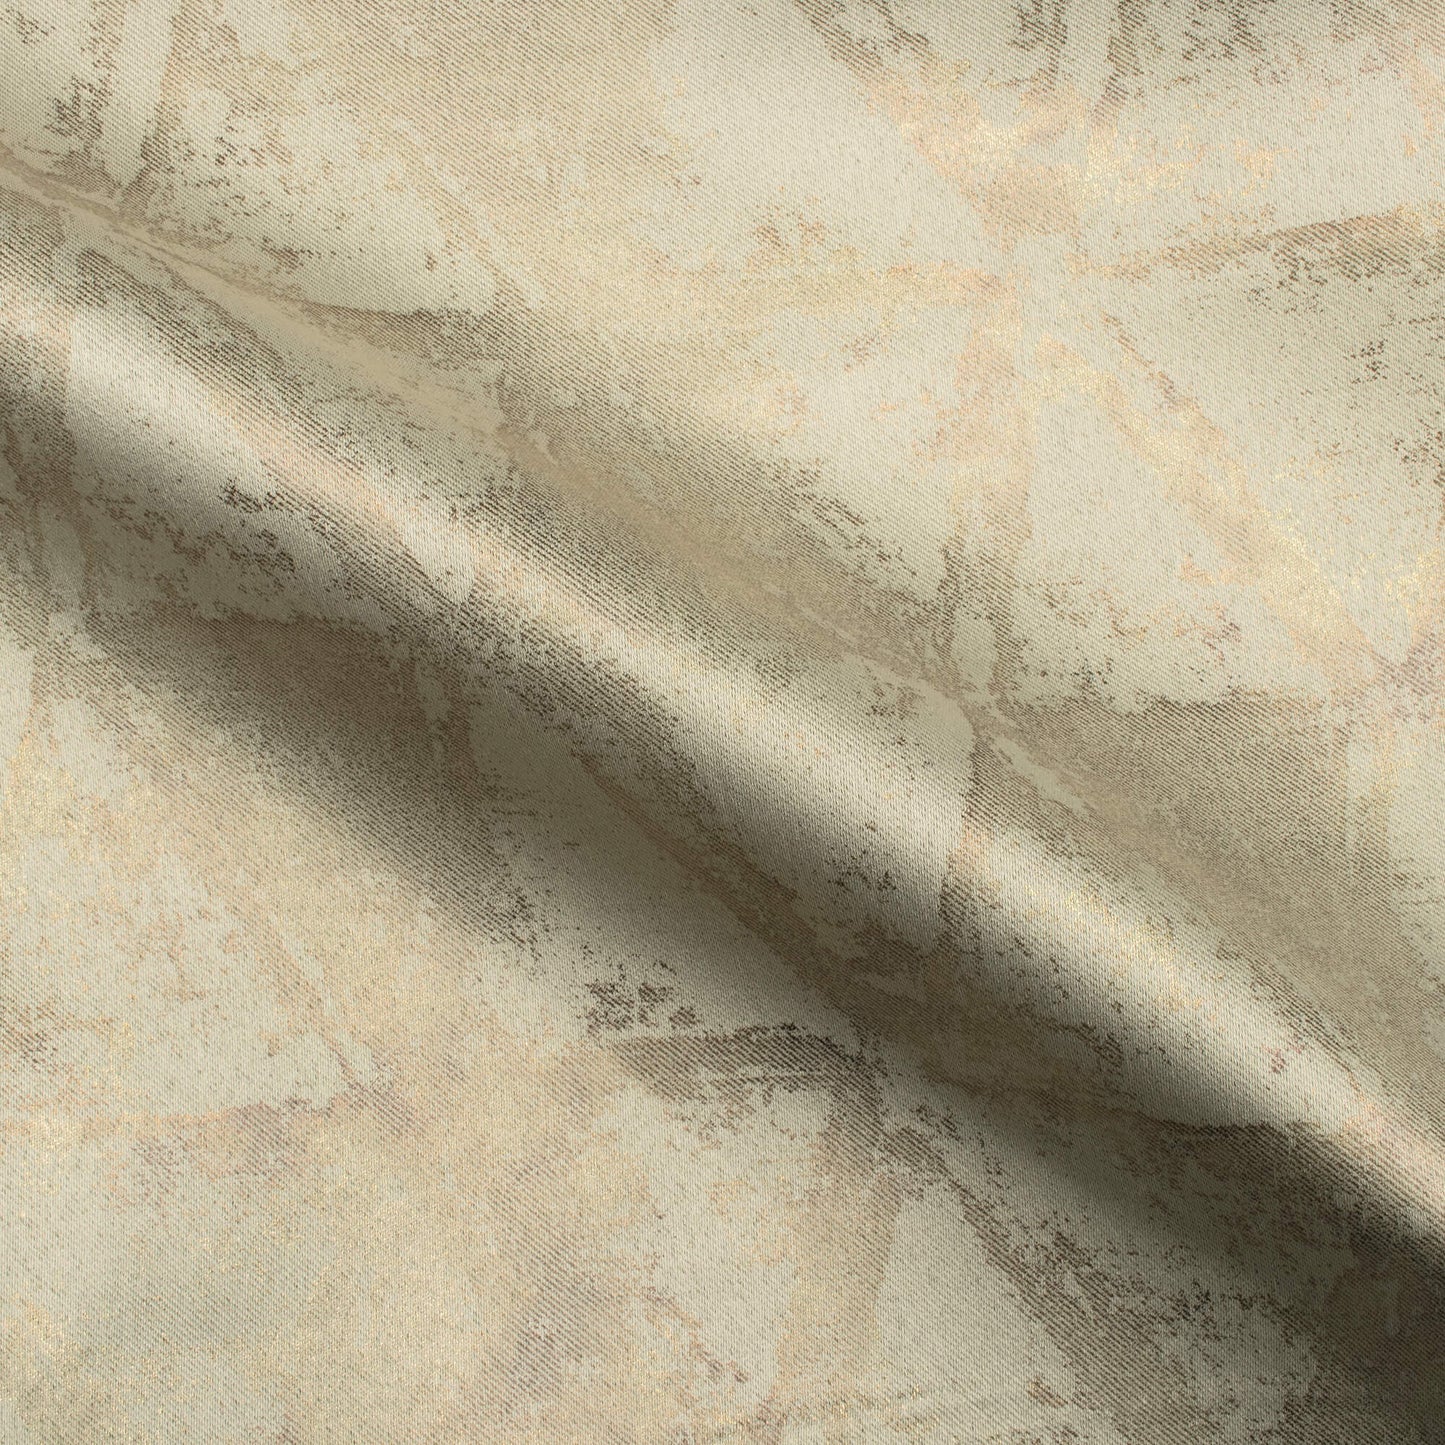 Wheat Brown Geometric Pattern Golden Foil Premium Curtain Fabric (Width 54 Inches)